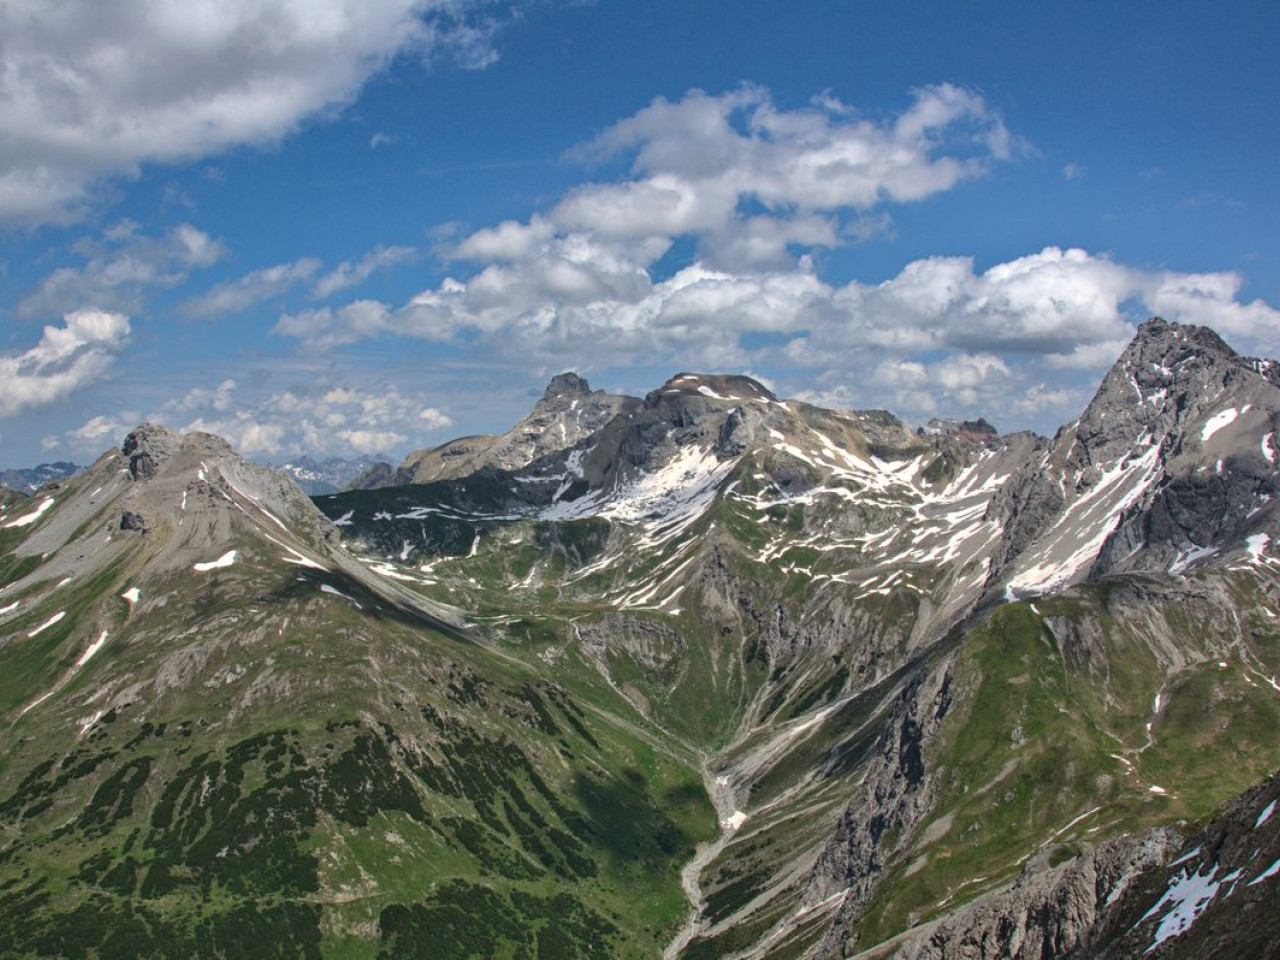  Blick in Richtung Wetterspitze (Mitte hinten), Feuerspitze (Mitte) und Vorderseespitze (rechts)